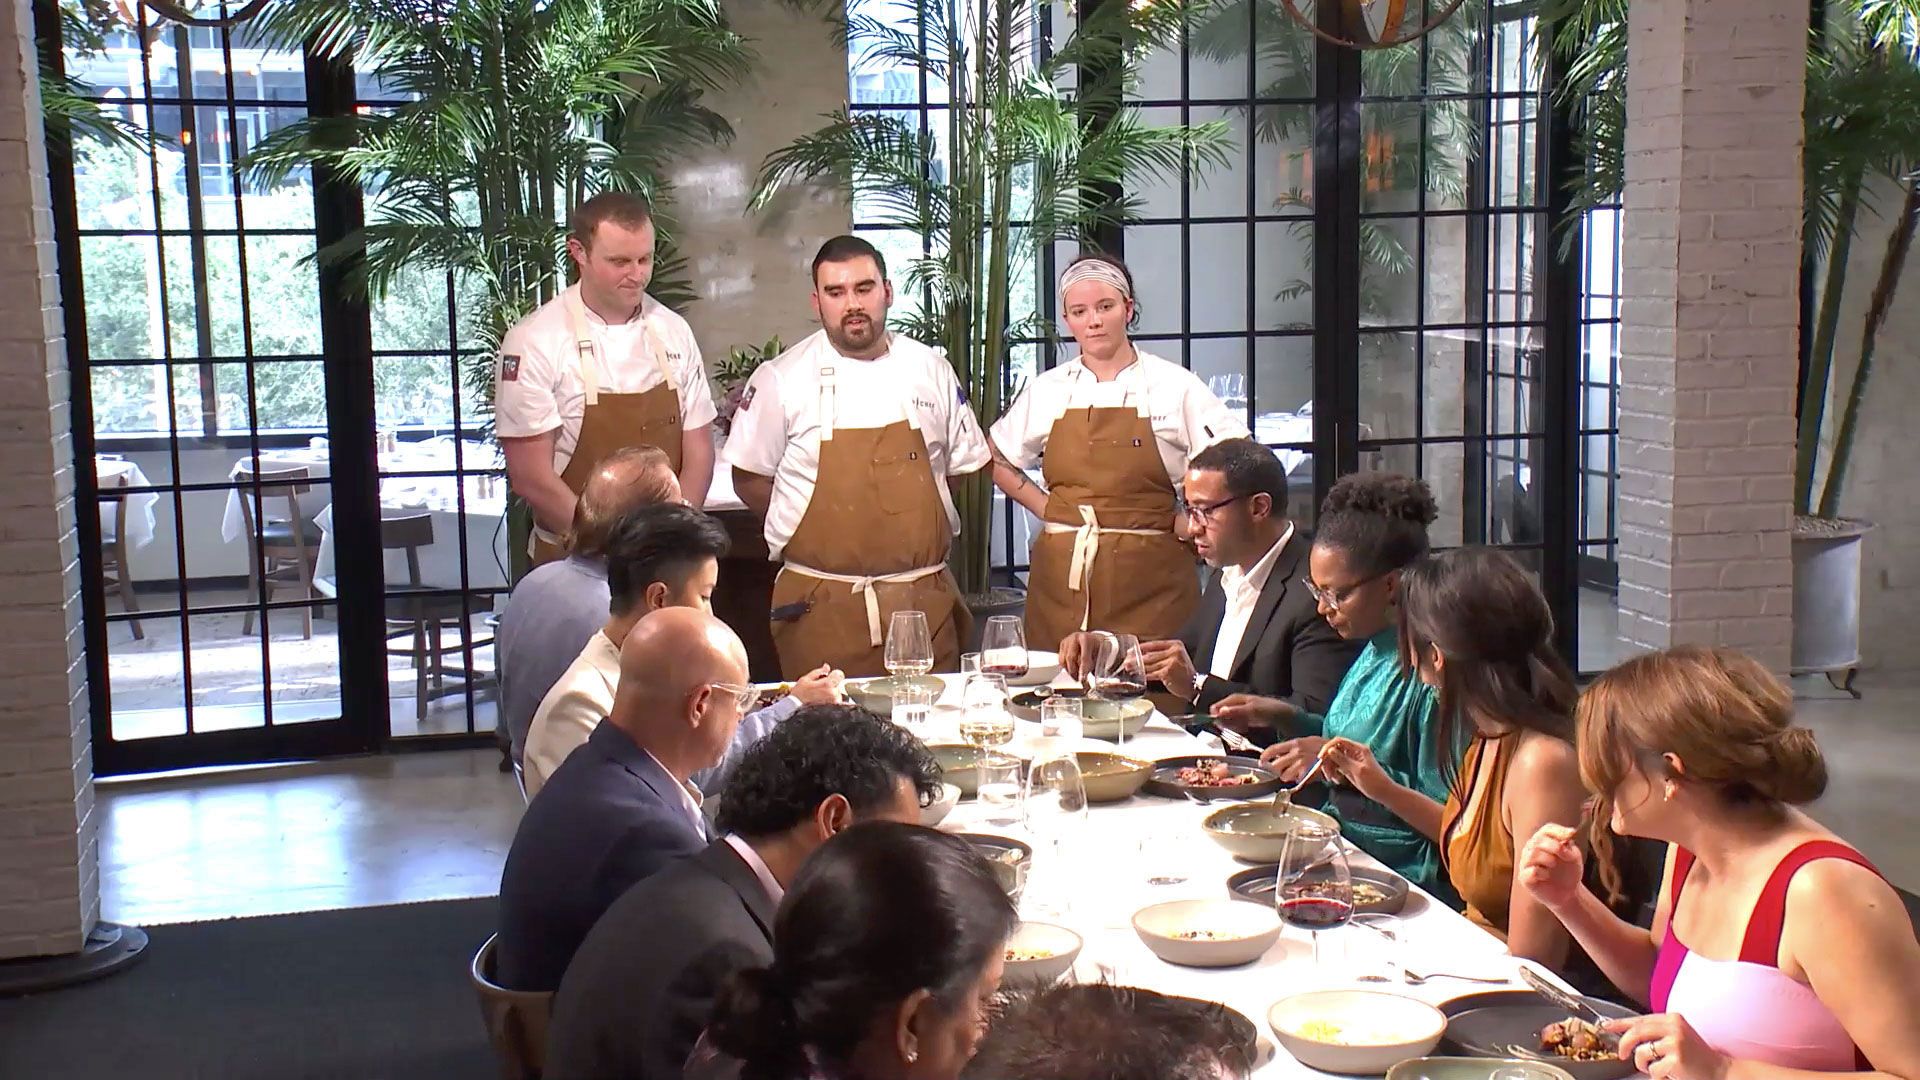 Top Chef: Houston' season 19, episode 1 premiere recap